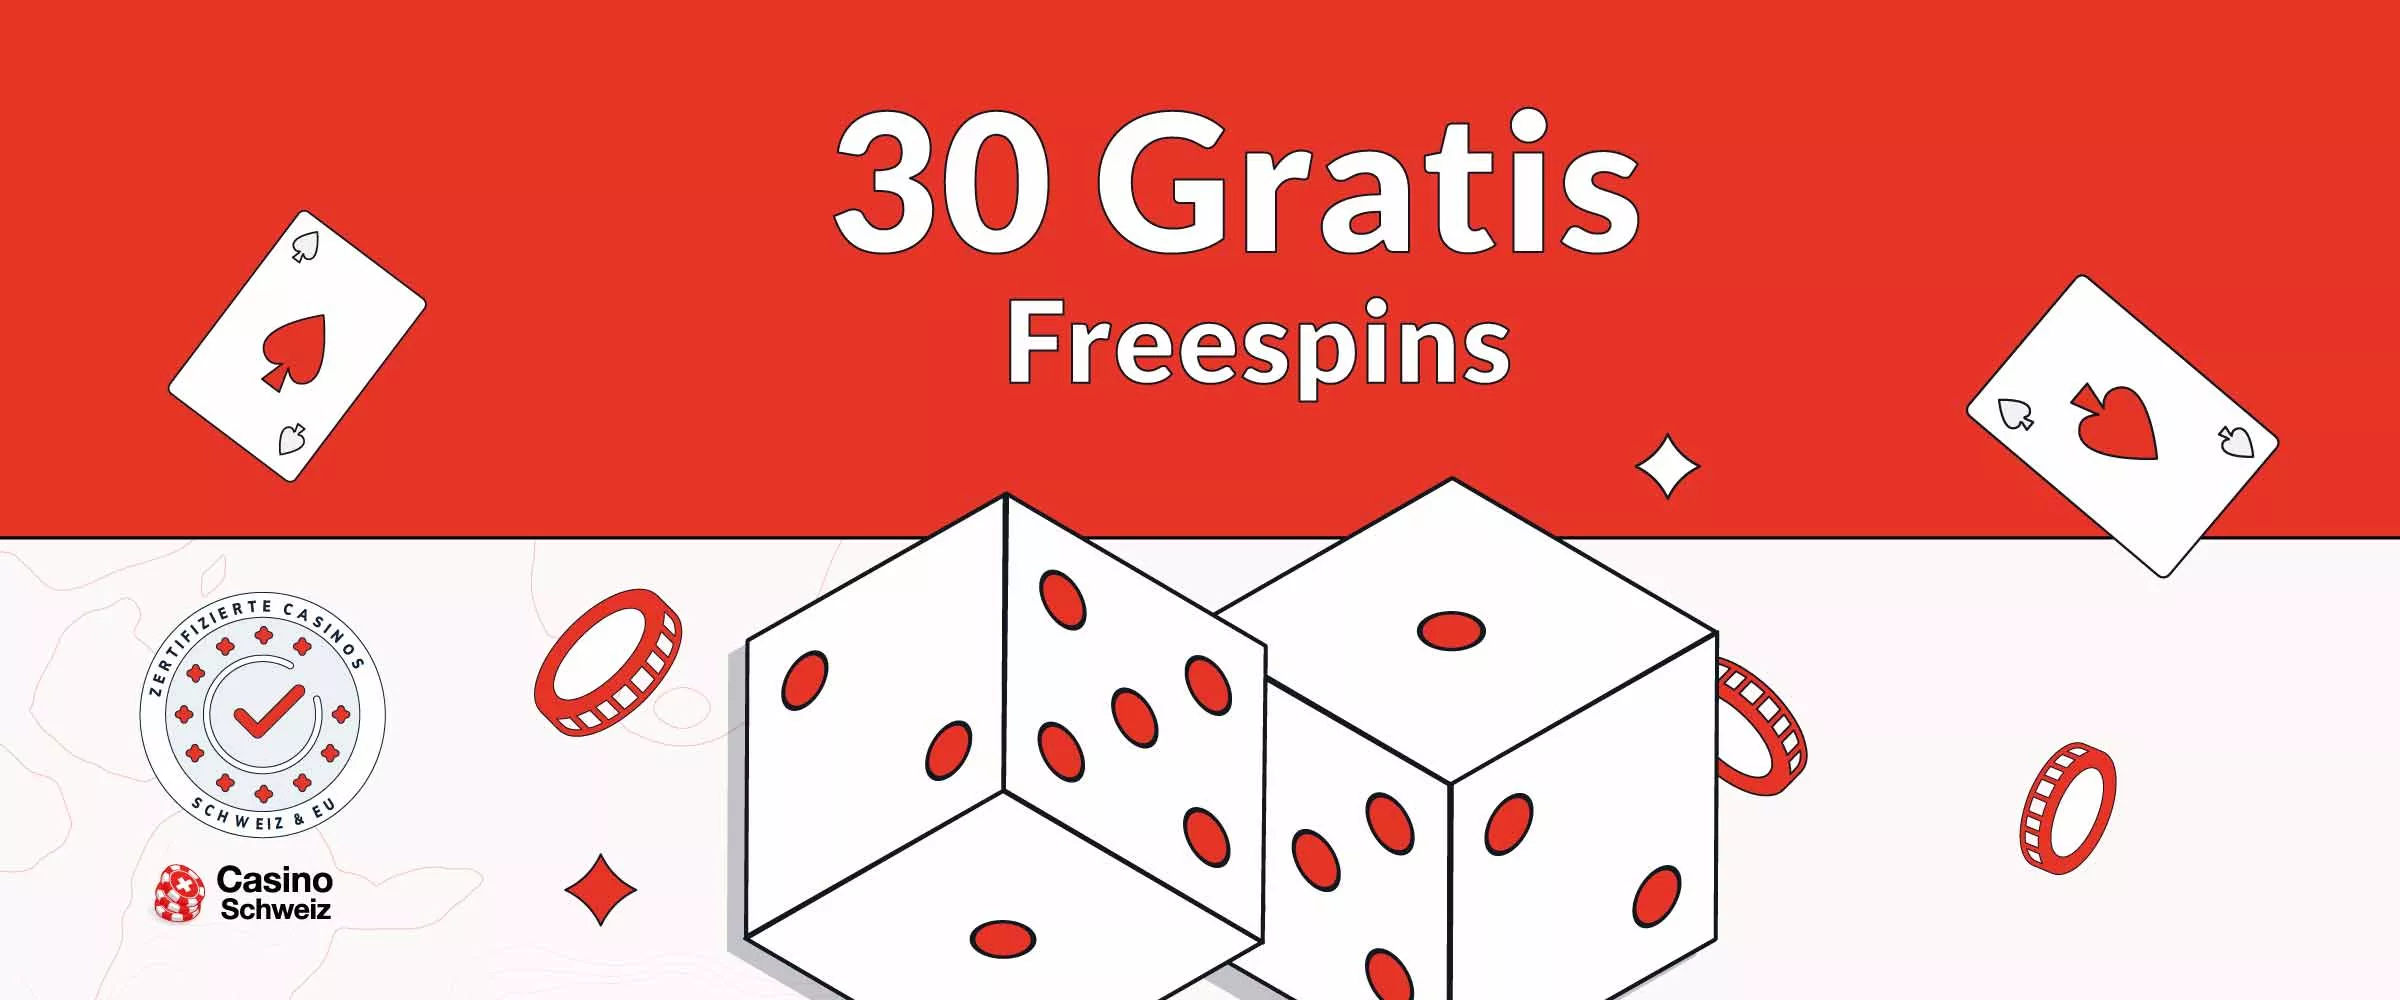 30 Gratis Freespins No Deposit 